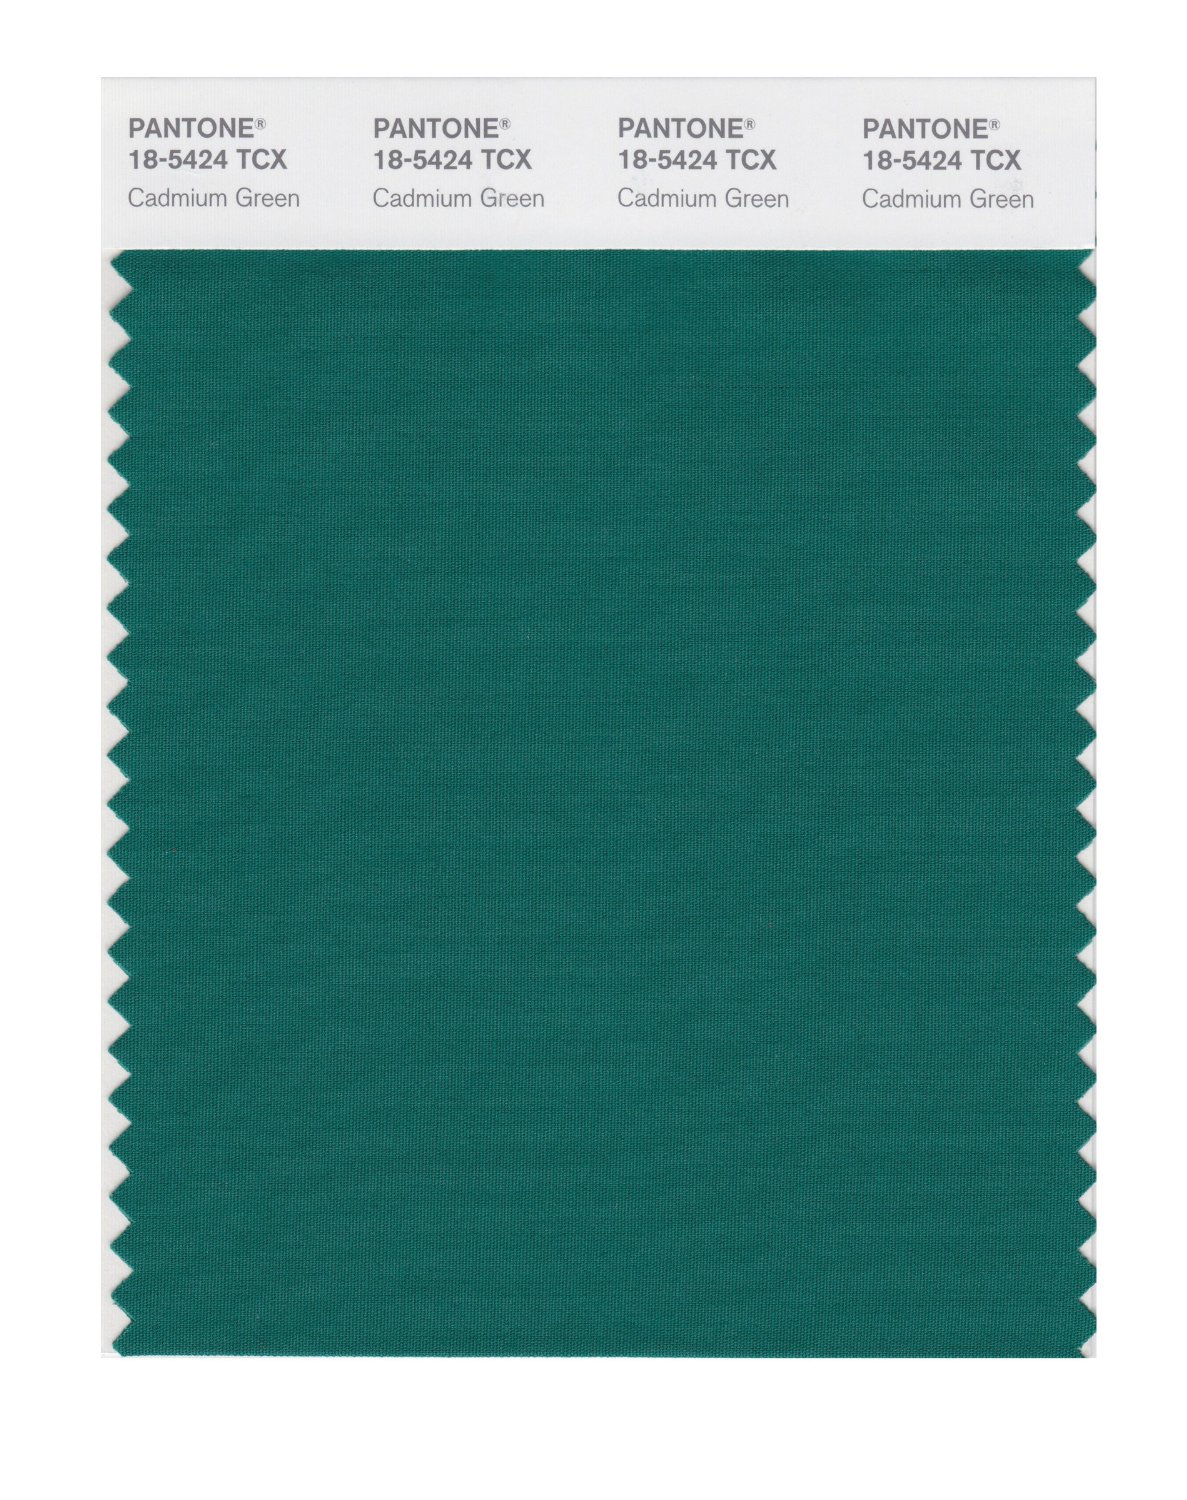 Pantone Cotton Swatch 18-5424 Cadmium Green